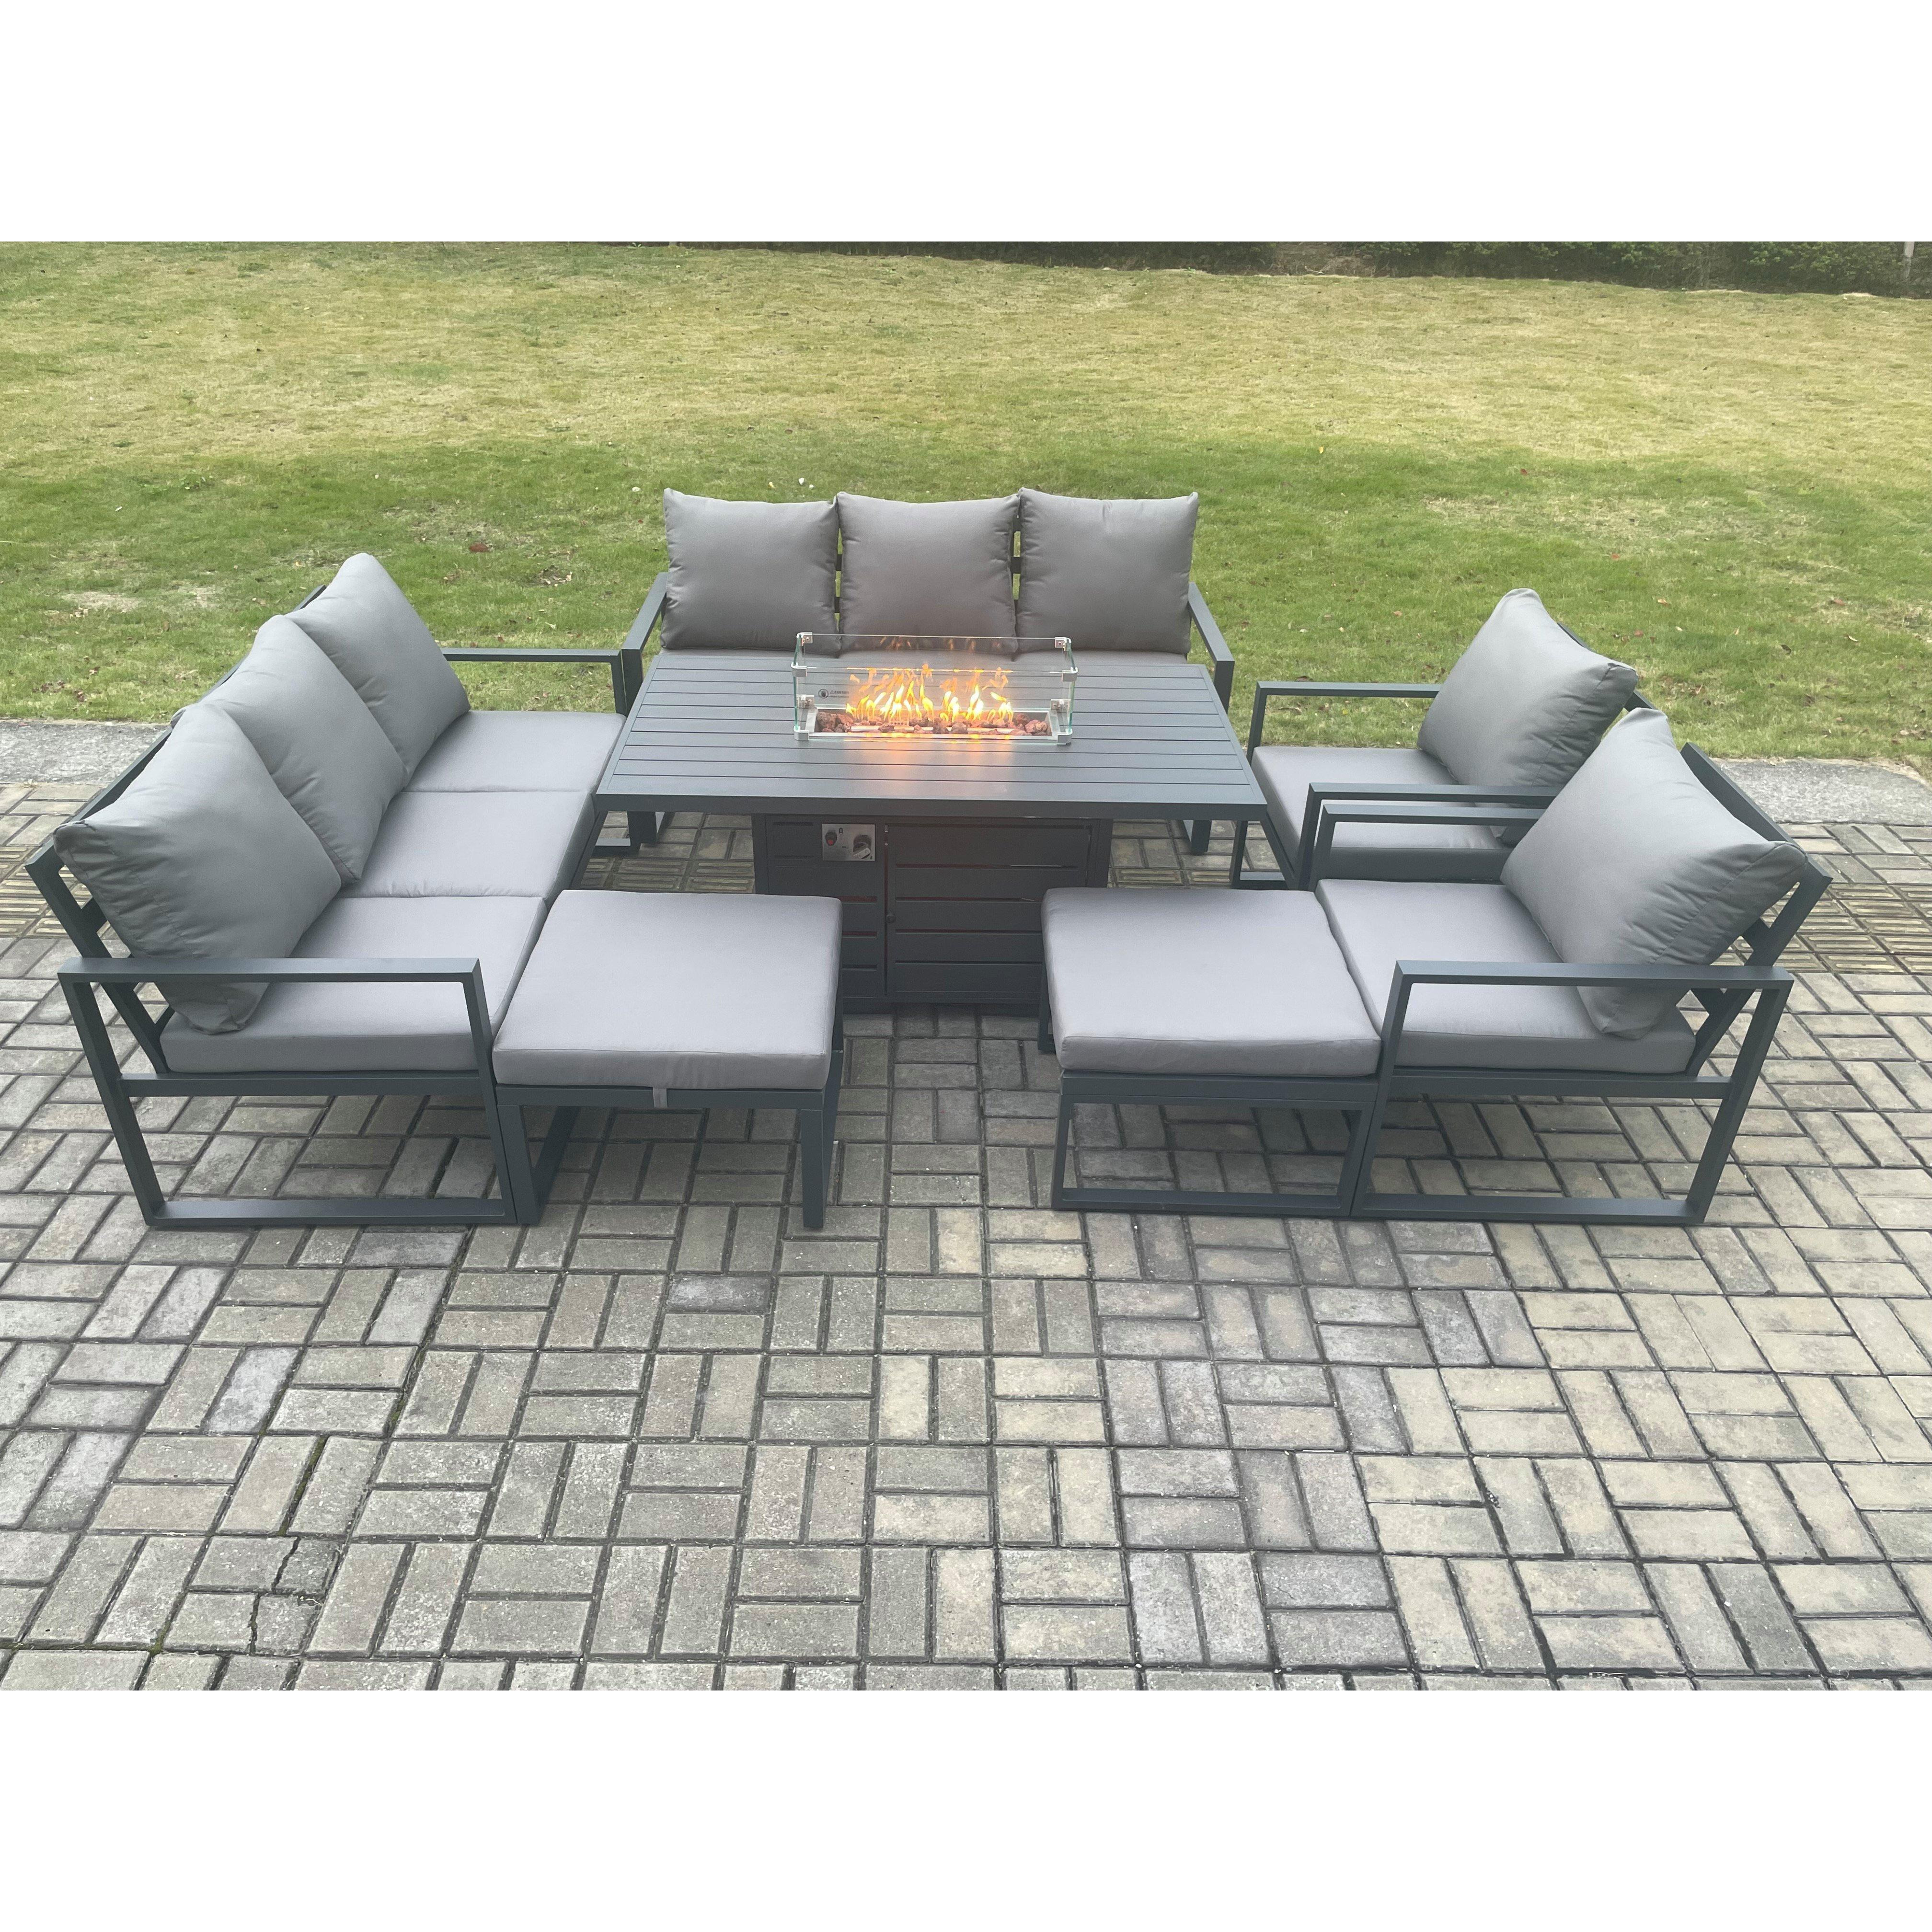 Aluminium Outdoor Garden Furniture Set Patio Lounge Sofa Gas Fire Pit Dining Table Set with 2 Big Footstools Dark Grey - image 1